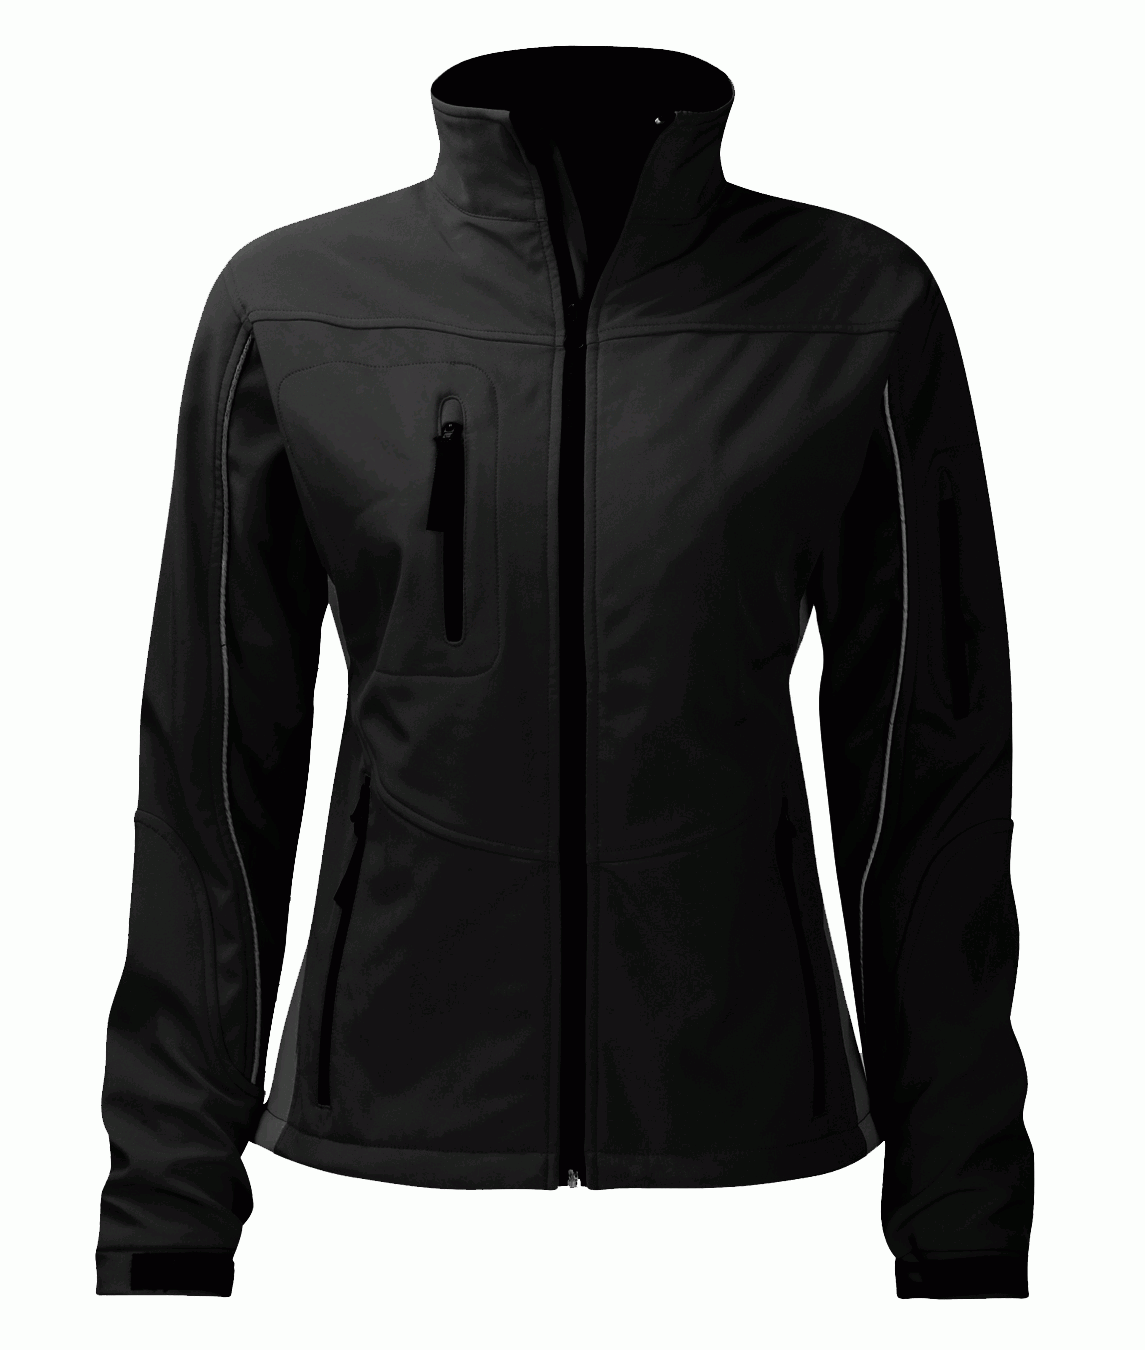 Orbit International SS3L3 Amethyst Full Zip Black Ladies Soft Shell Jacket